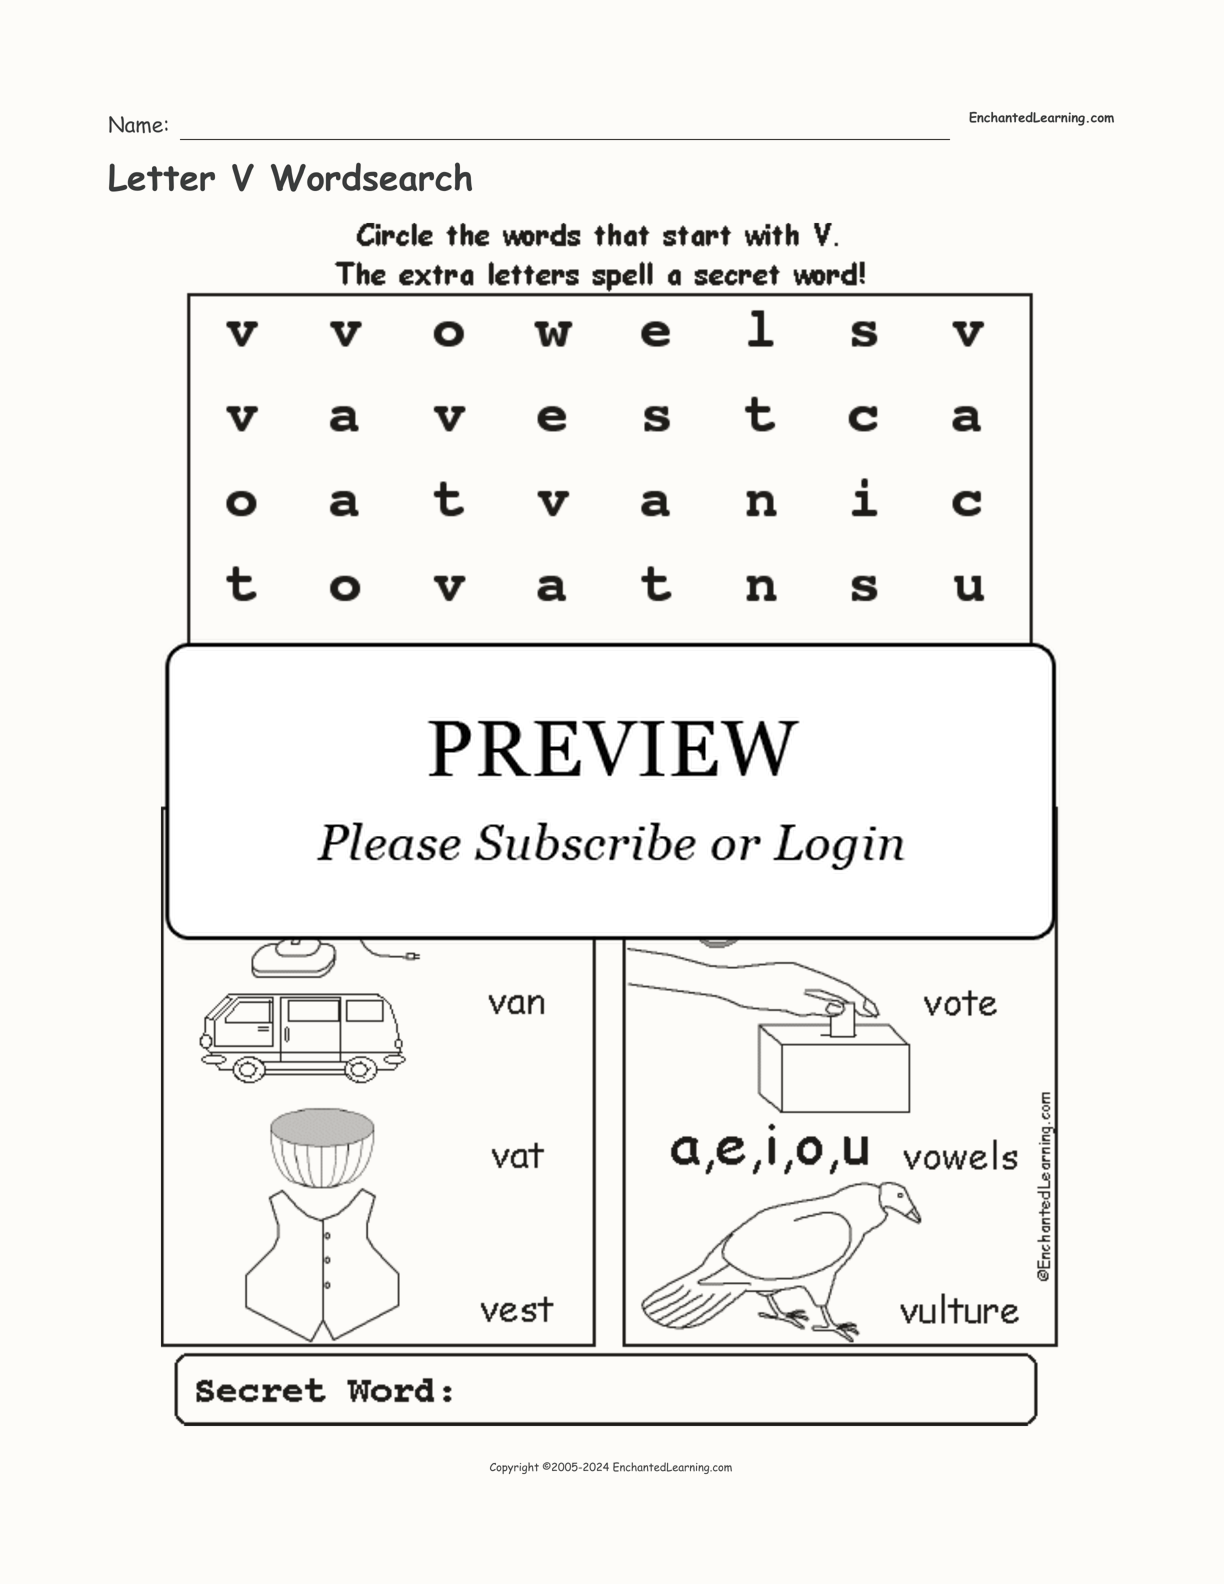 Letter V Wordsearch interactive worksheet page 1